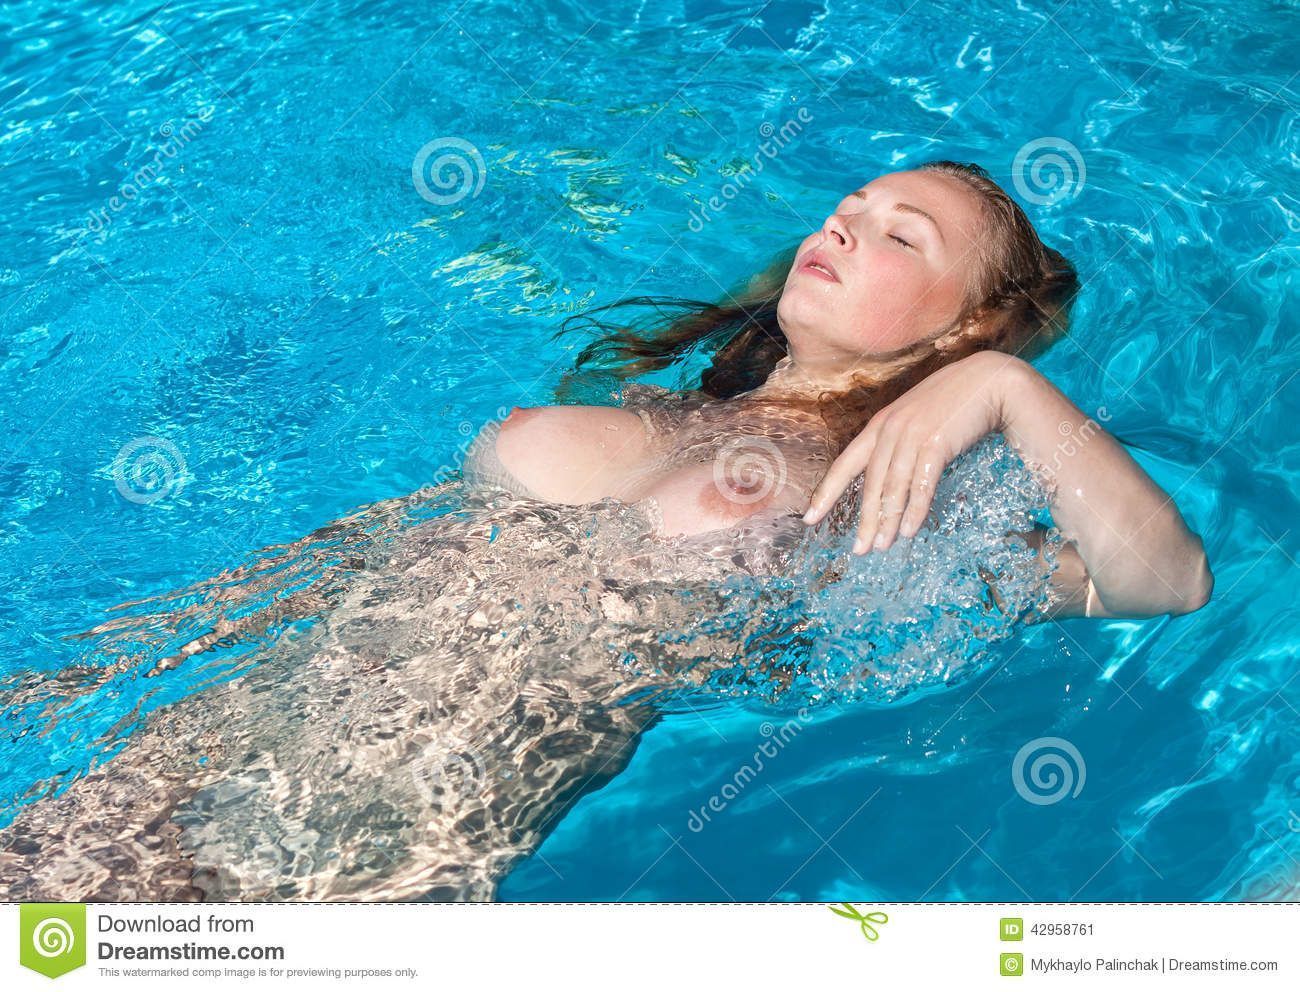 Pocky reccomend dreamstime com beautiful girl nude in pool